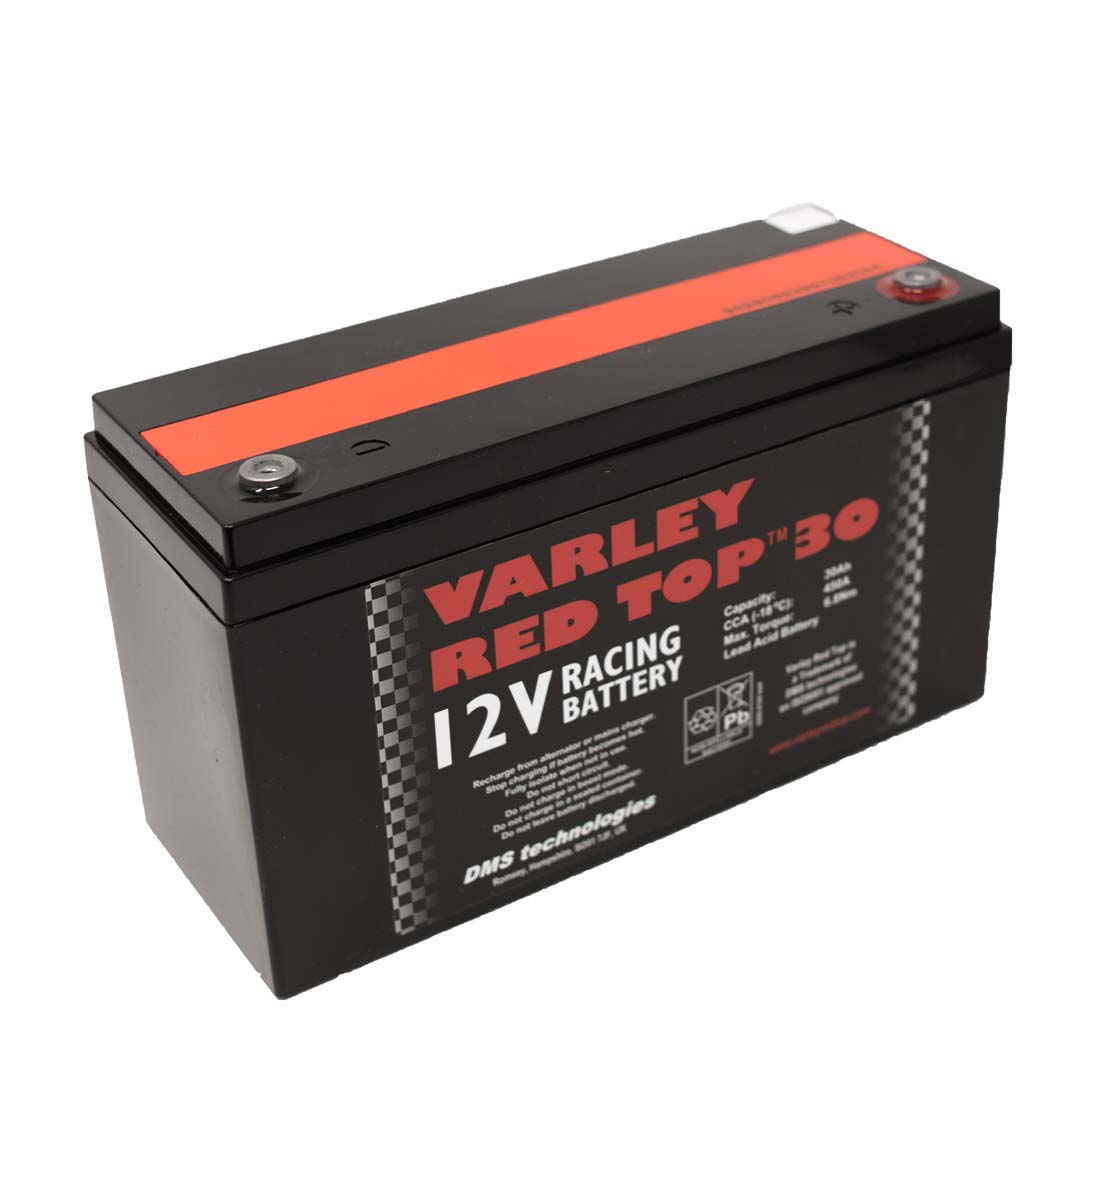 Varley Red Top 30 AGM Racing Battery RT30 12V 30Ah